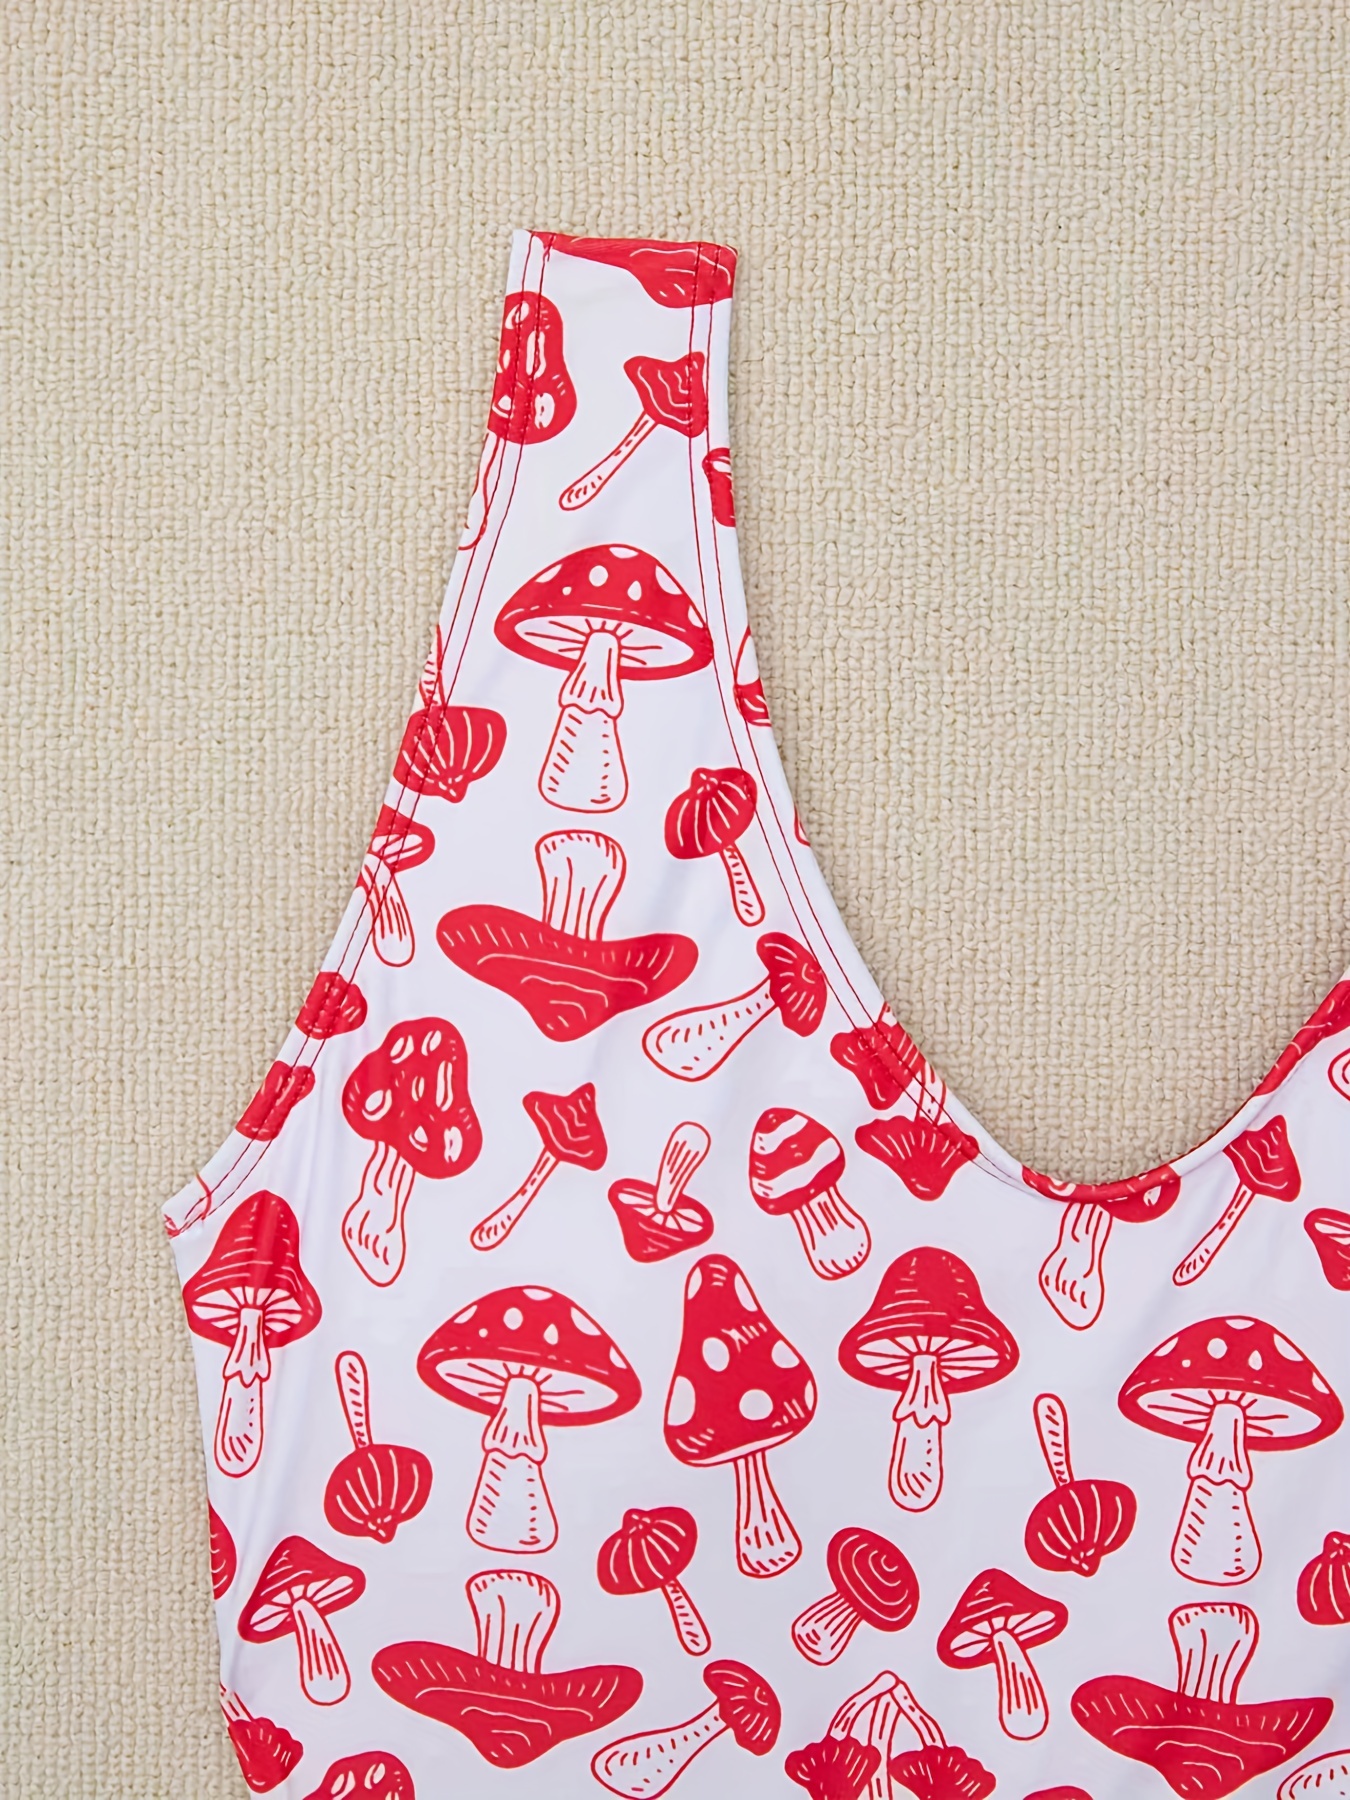 Pink Spandex Mushroom Design Swimsuits Fabric